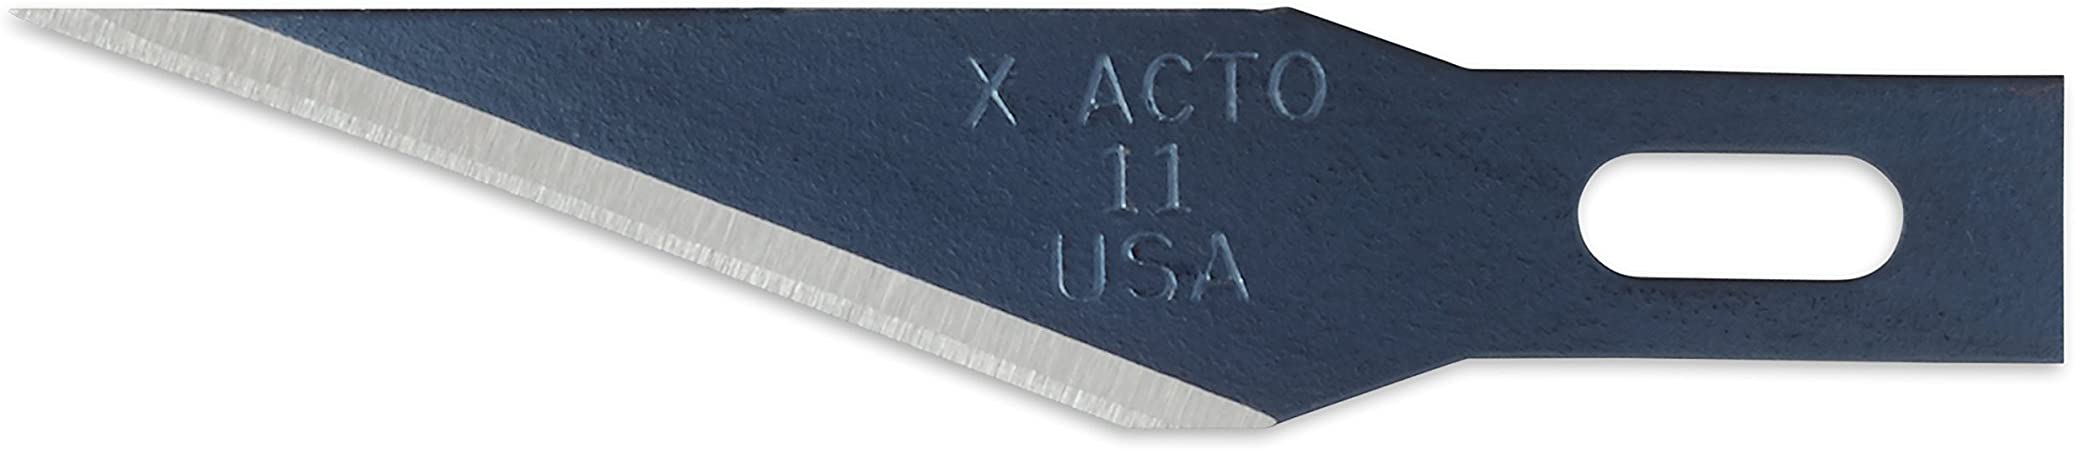 X-Acto No.11 Blades for X-Acto Knives, Bulk Pack, 100 Blades per Box (X611)